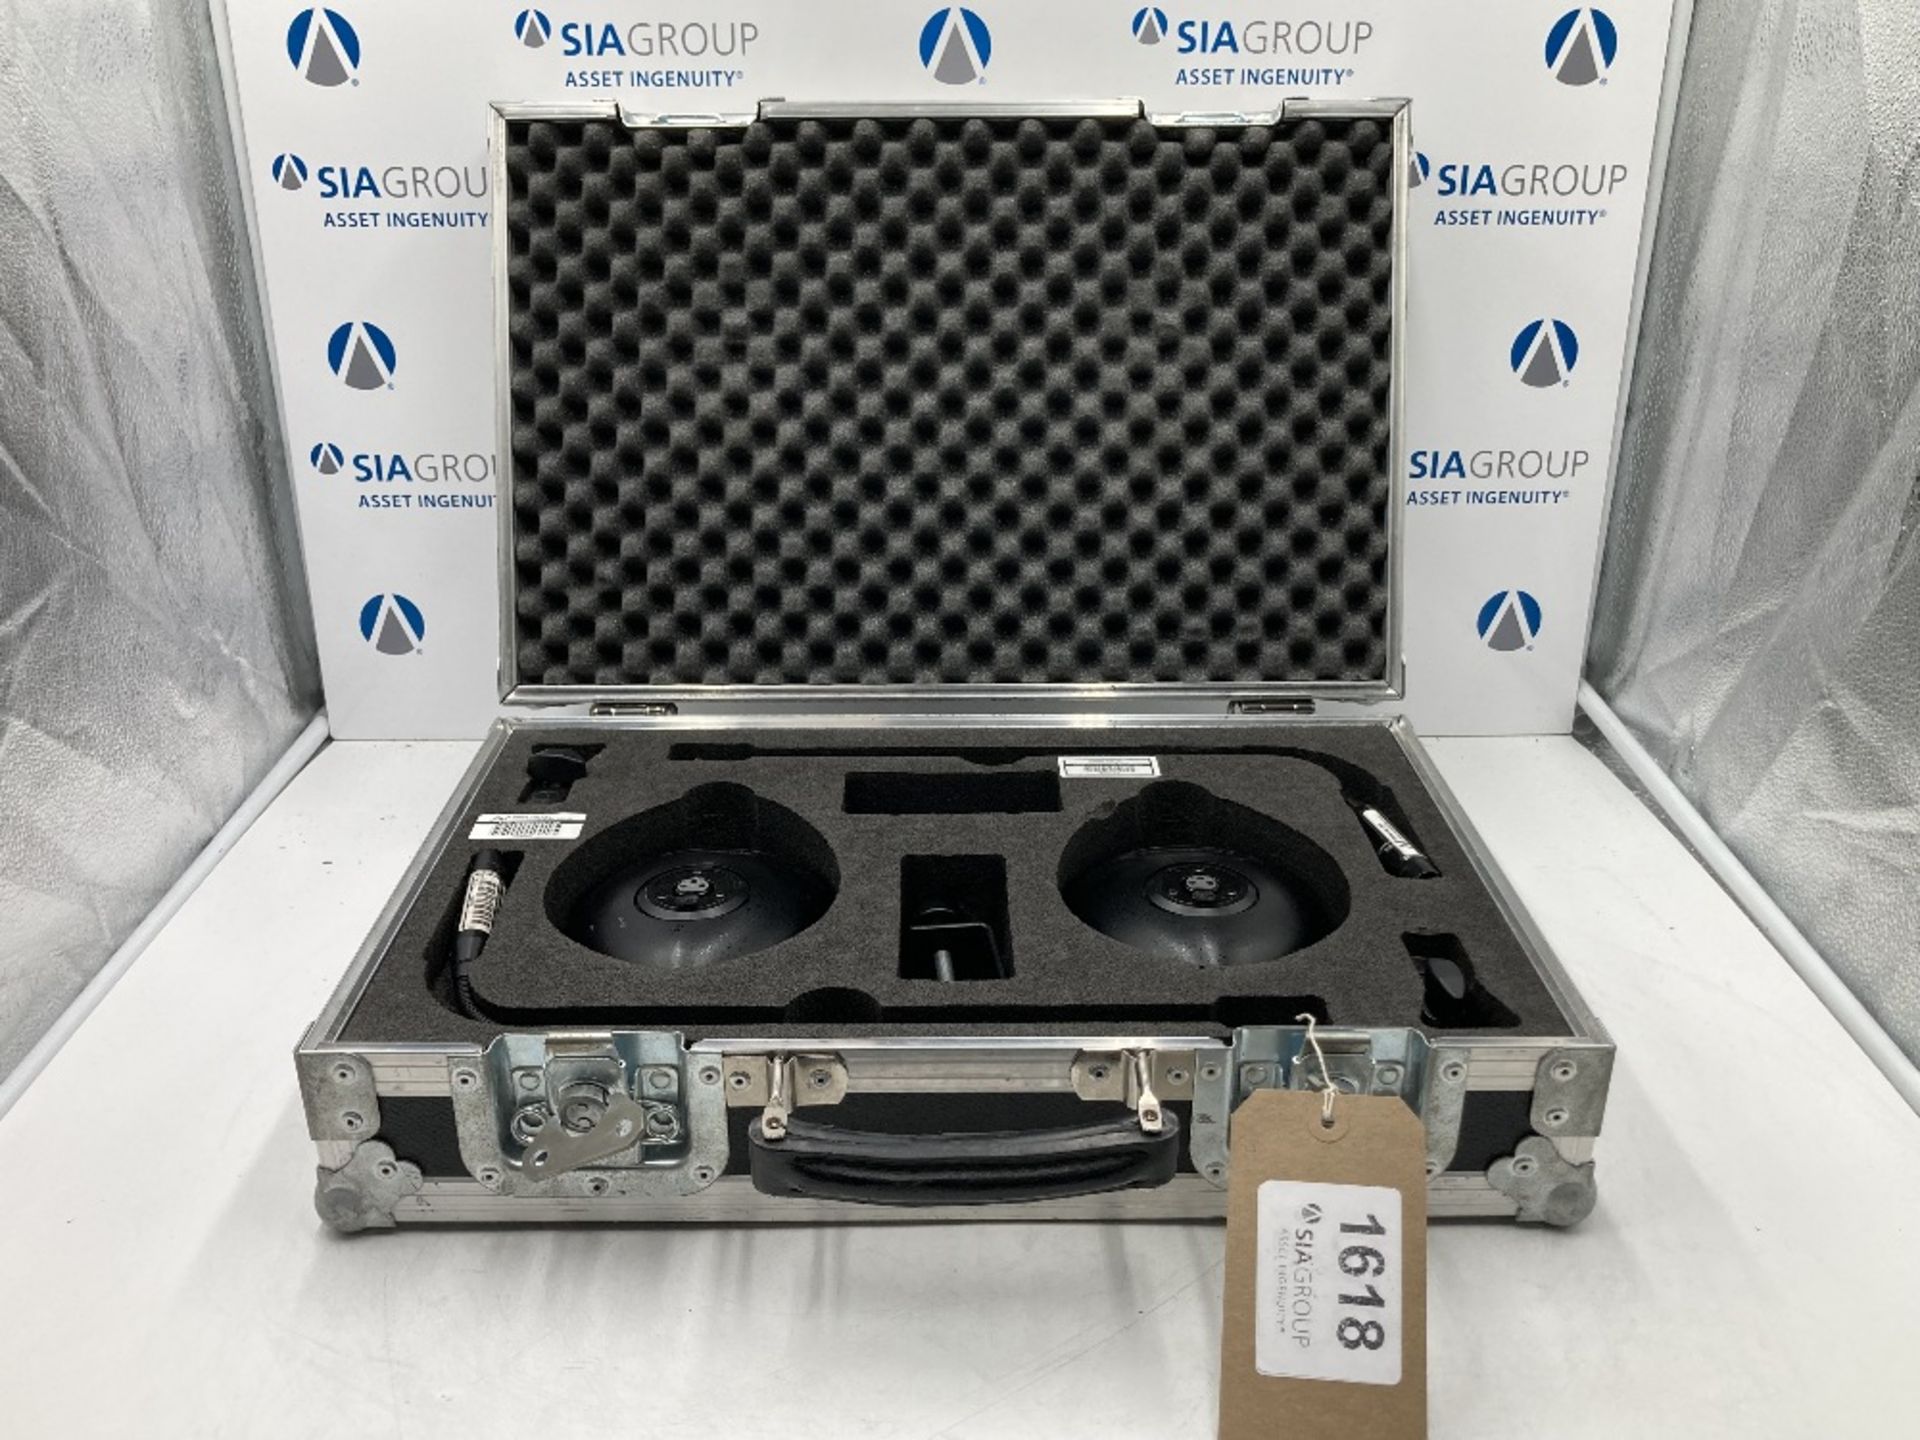 Audio Technica ES915C Microphones & Heavy Duty Case